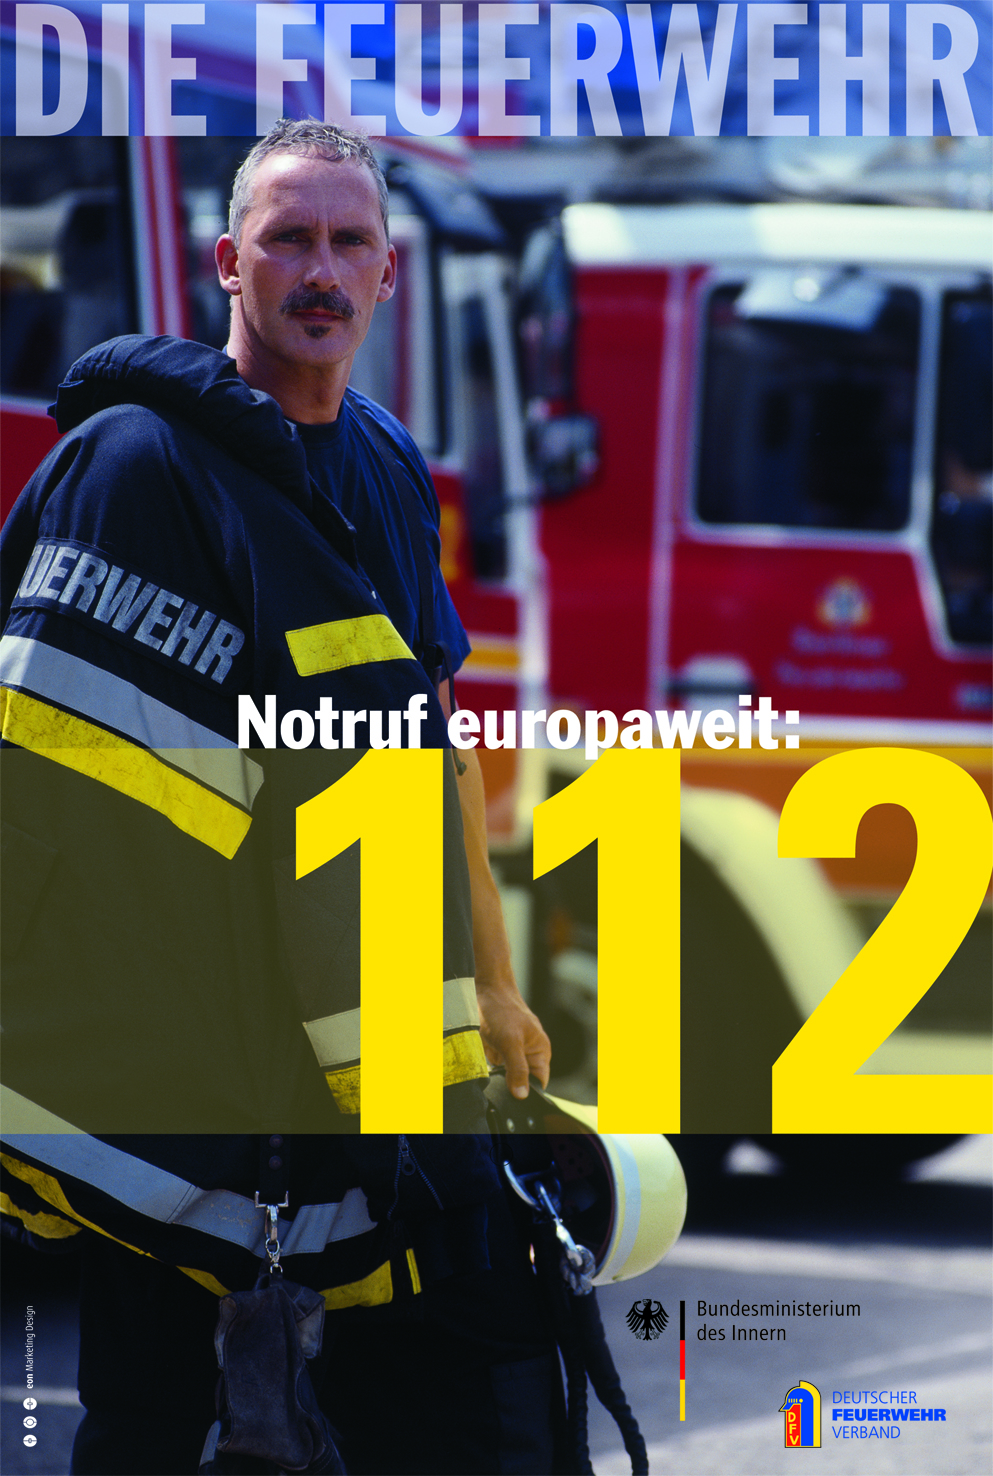 Notruf europaweit: 112 - Aktionsplakat zum EU-Notruftag am 11.2.2011